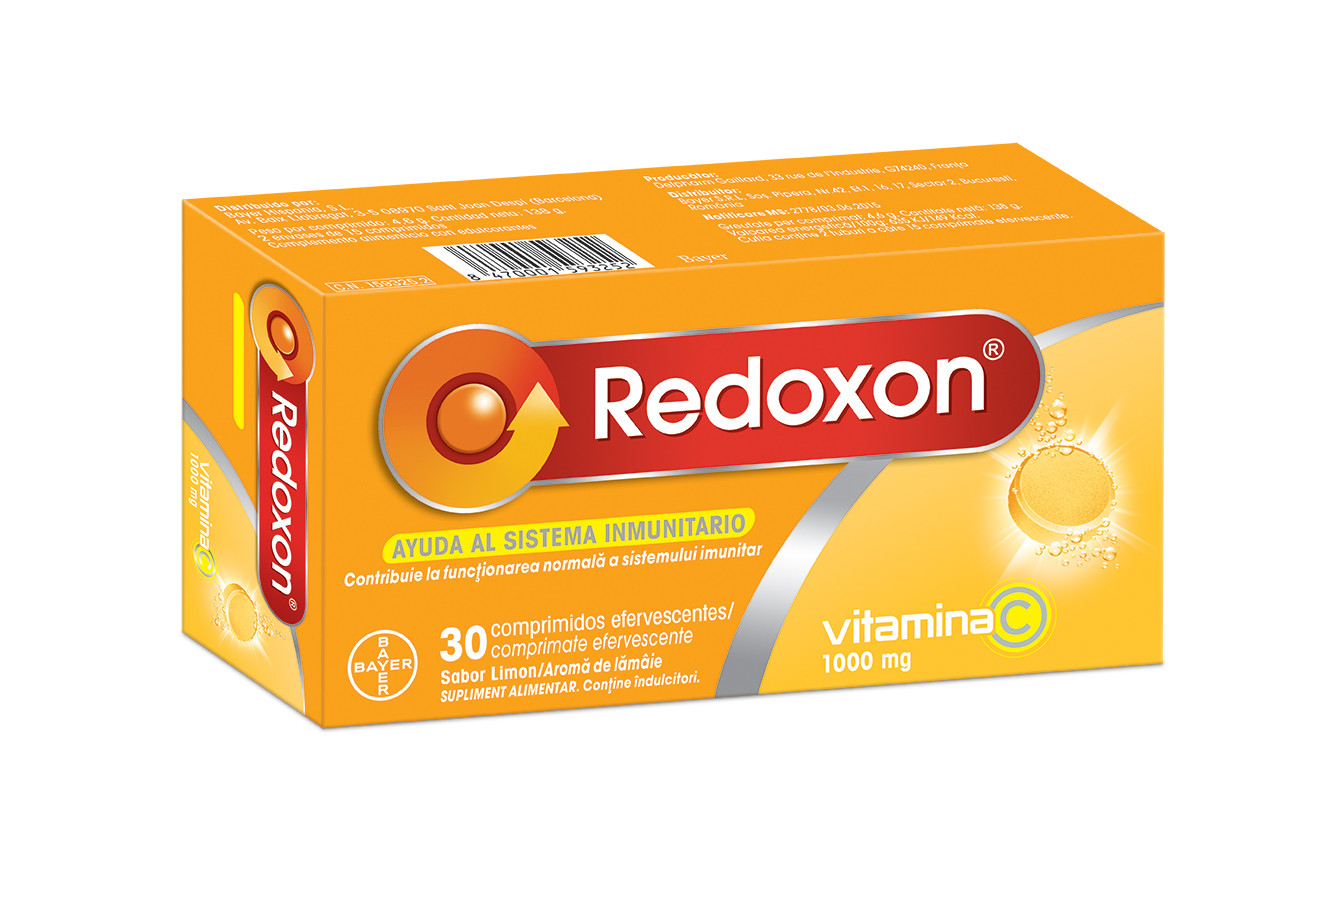 Redoxon vitamina C 1000 mg aroma de lamaie, 30 comprimate efervescente, Bayer